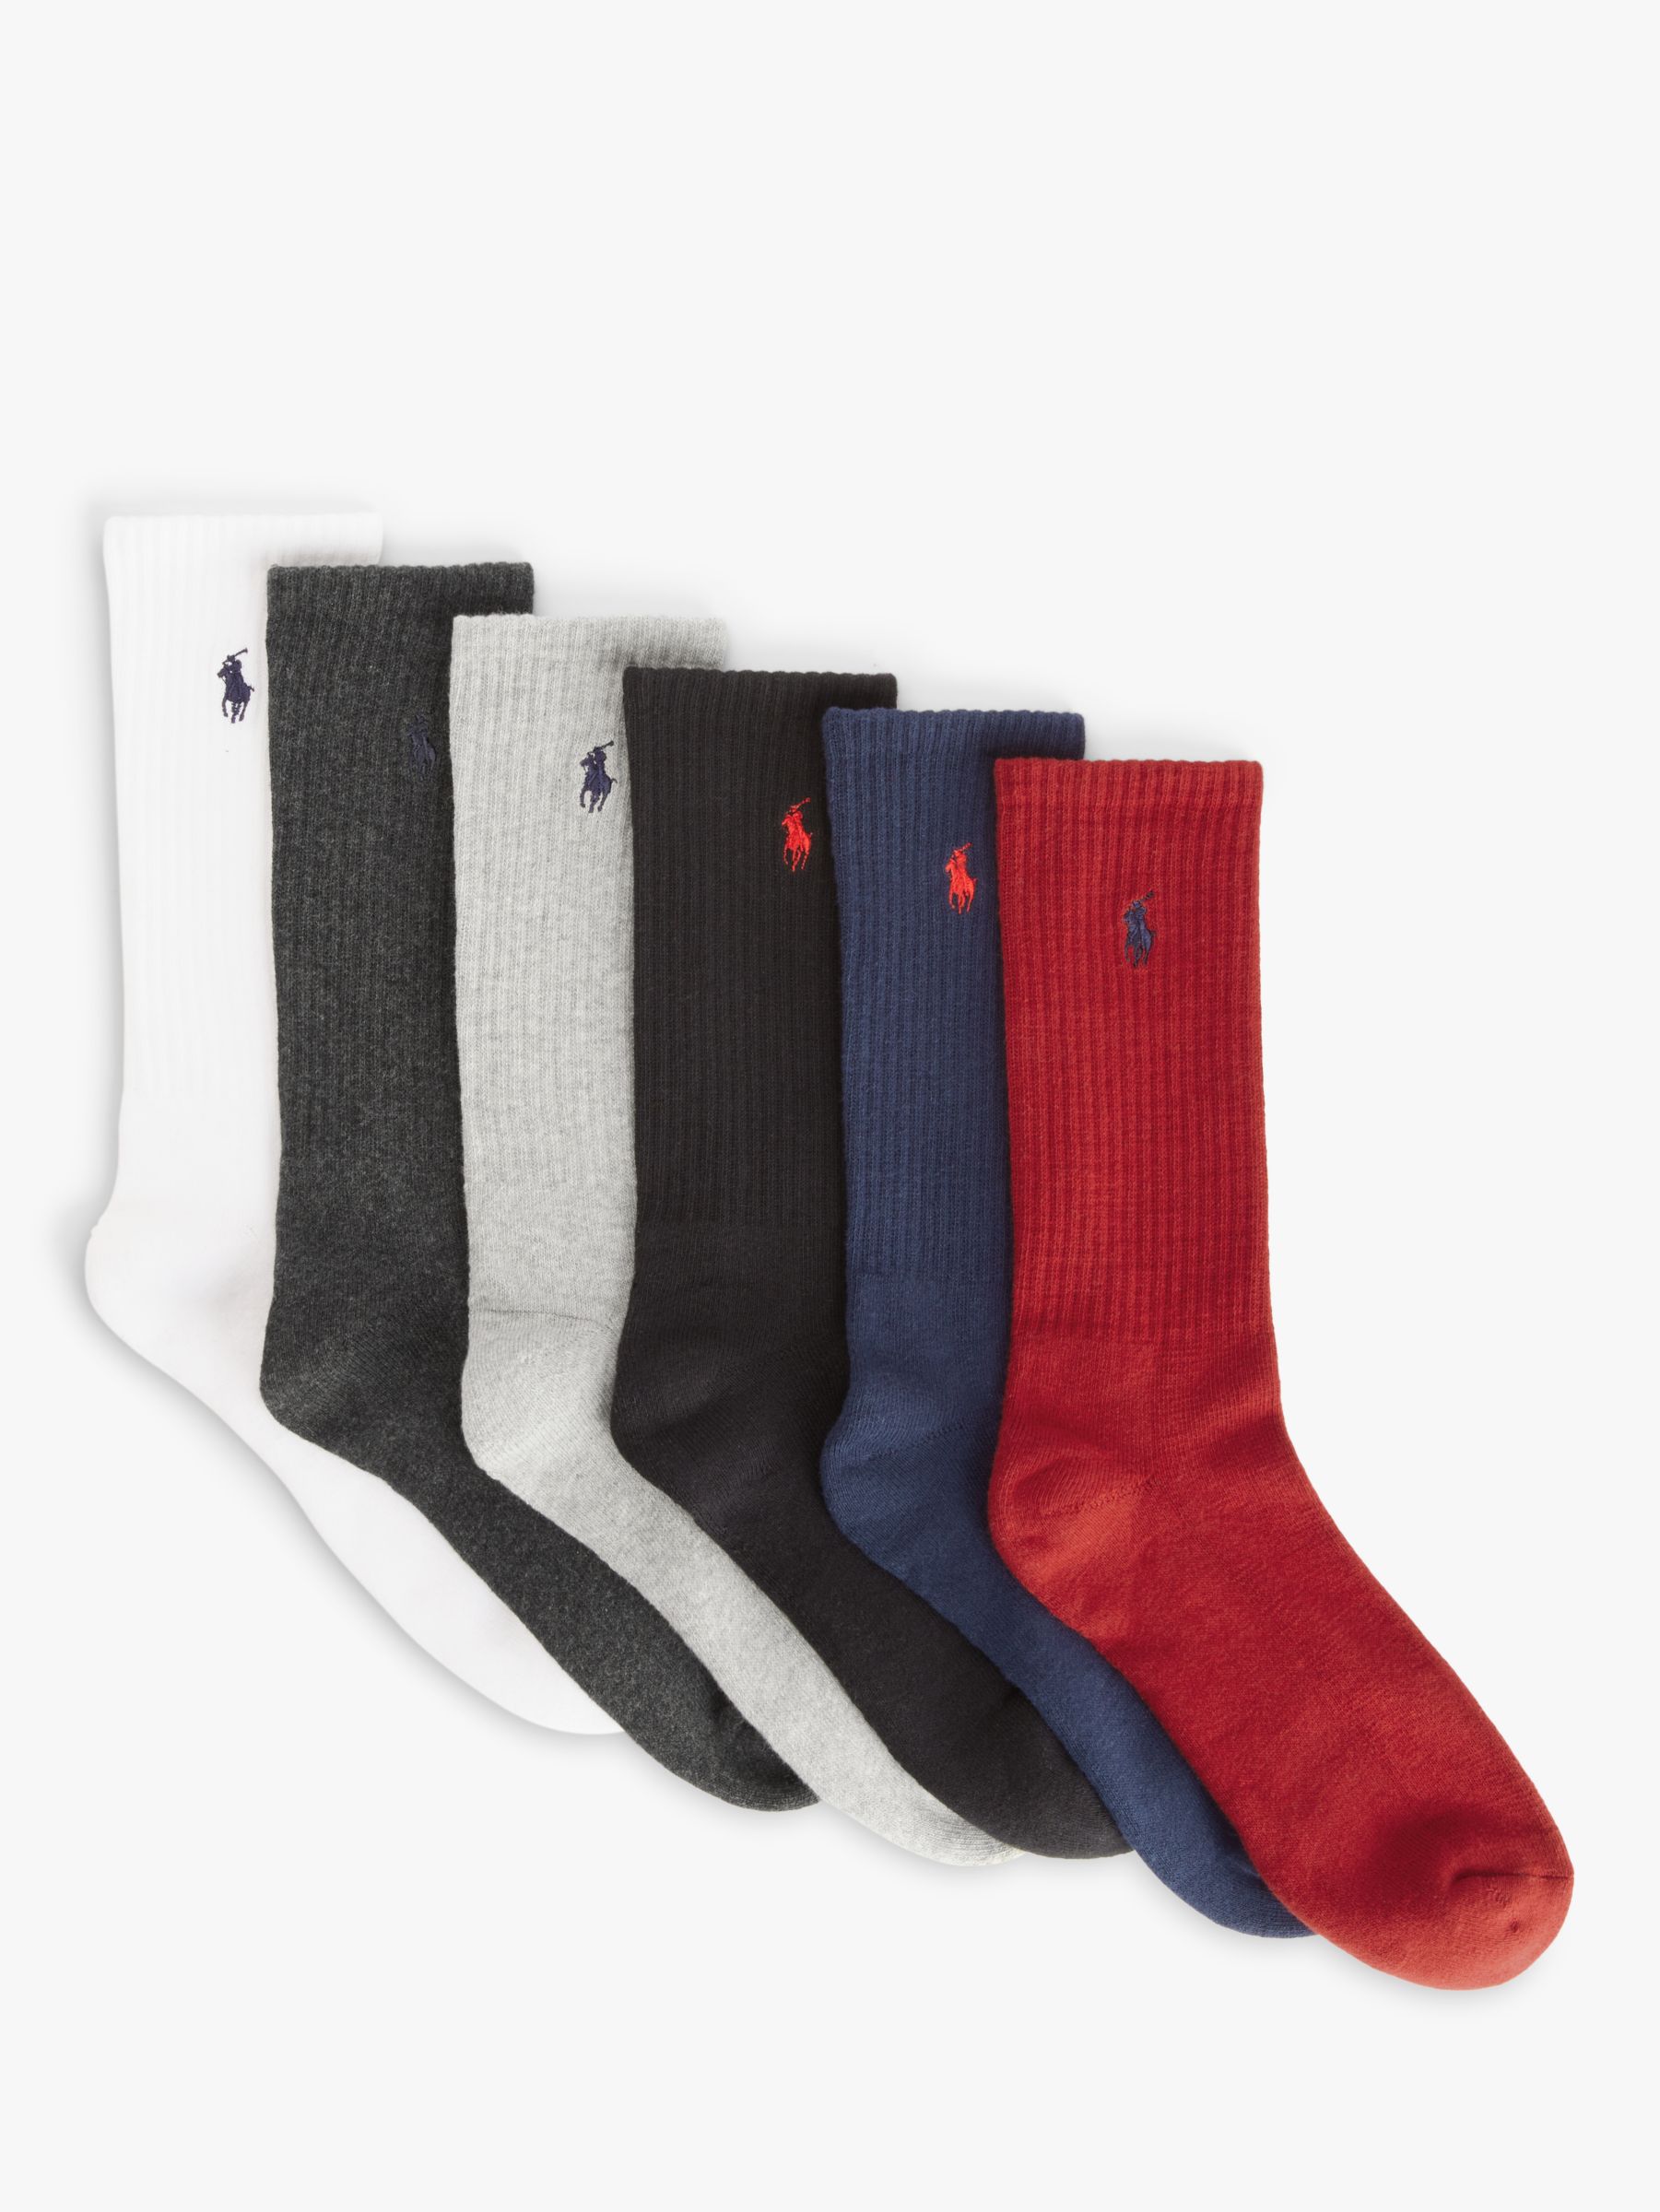 Polo Ralph Lauren Cotton Blend Crew Socks, One Size, Pack of 6, Multi ...